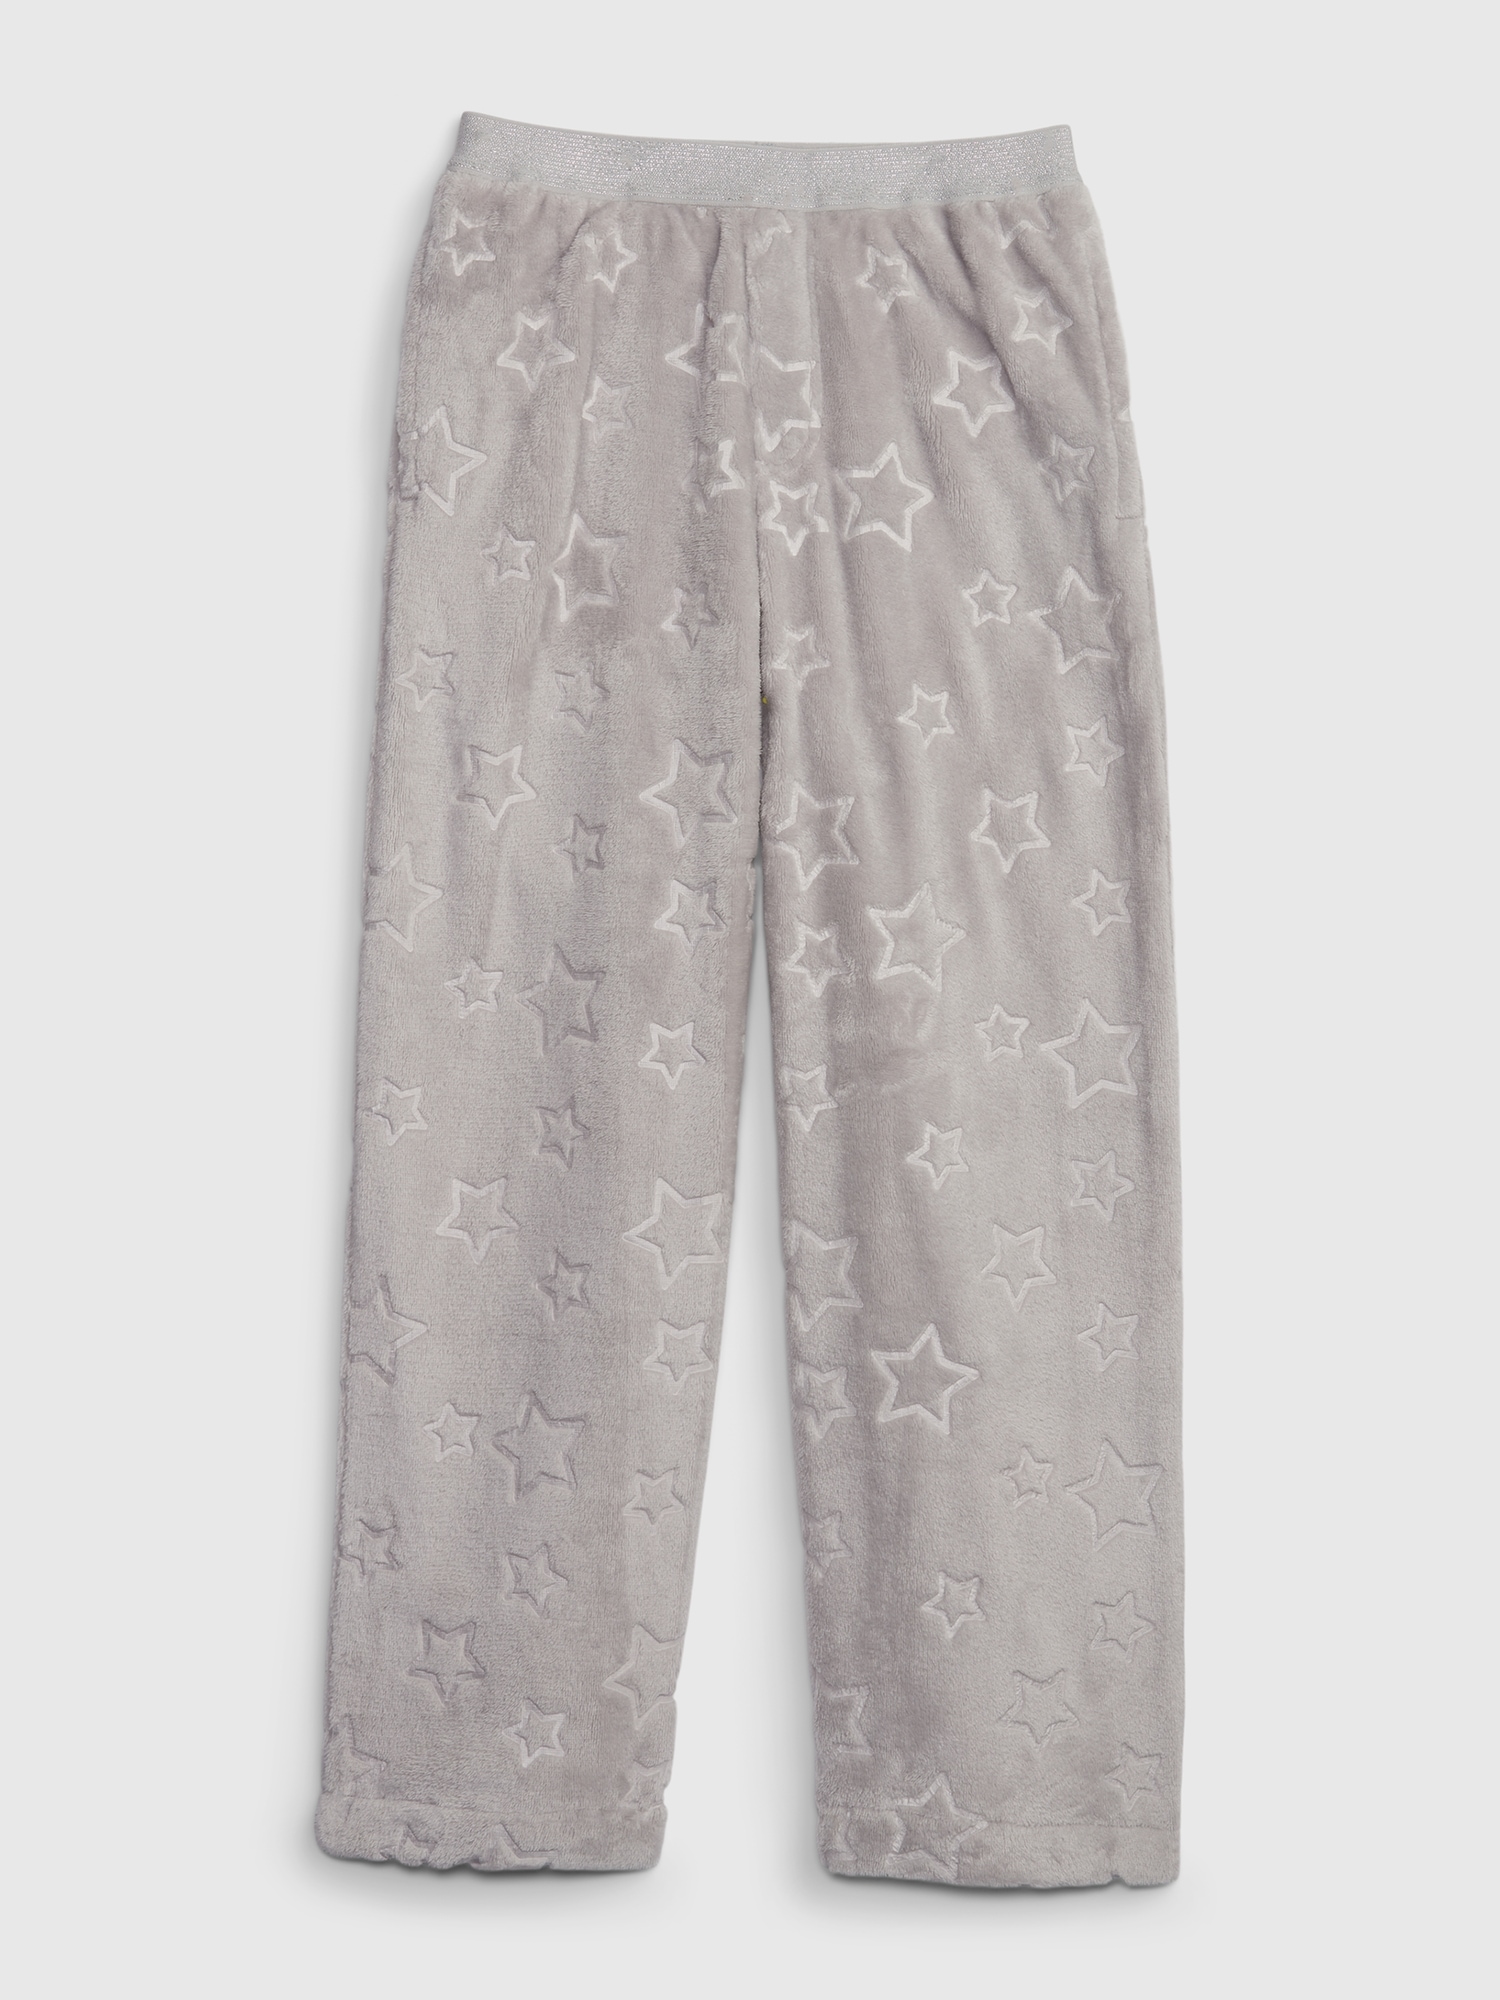 Women's Tank Top And Fuzzy Pajama Pants, Sexy Sleepwear And Loungewear Set  Small, Light/pastel Blue : Target